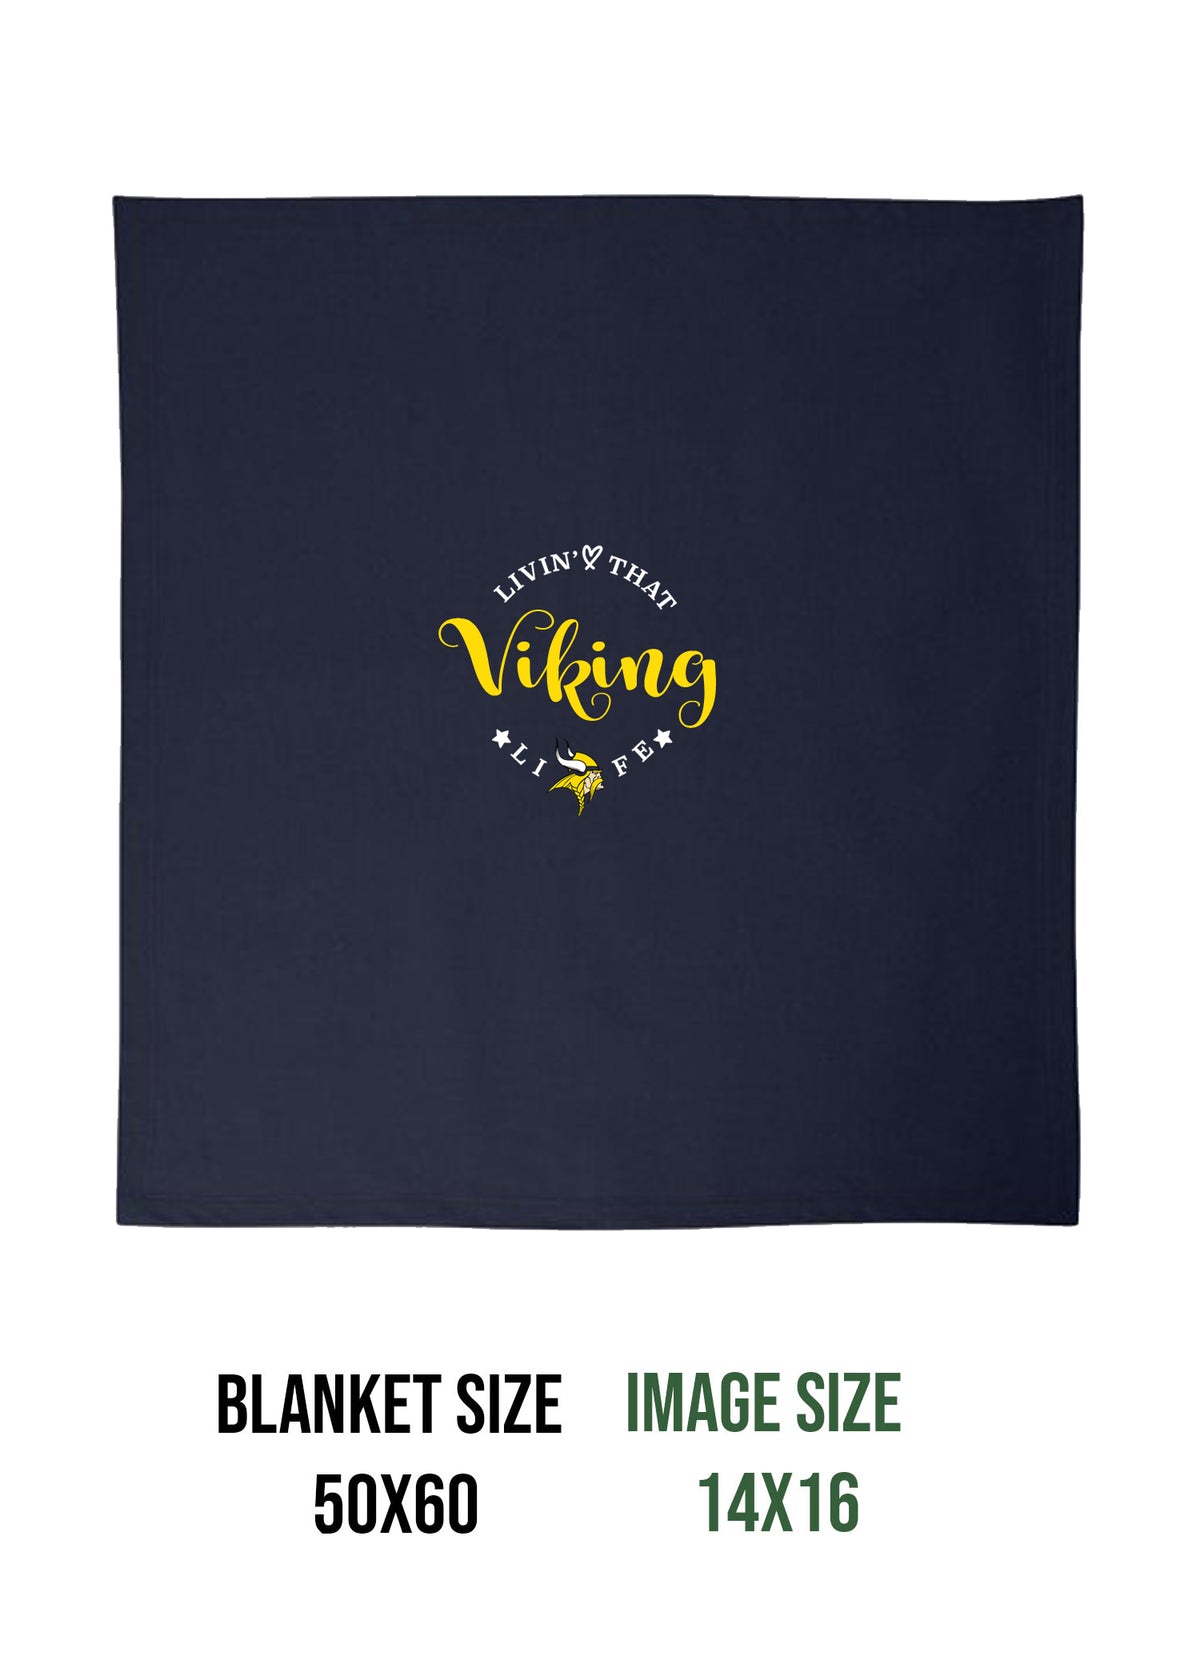 Vernon Design 8 Blanket